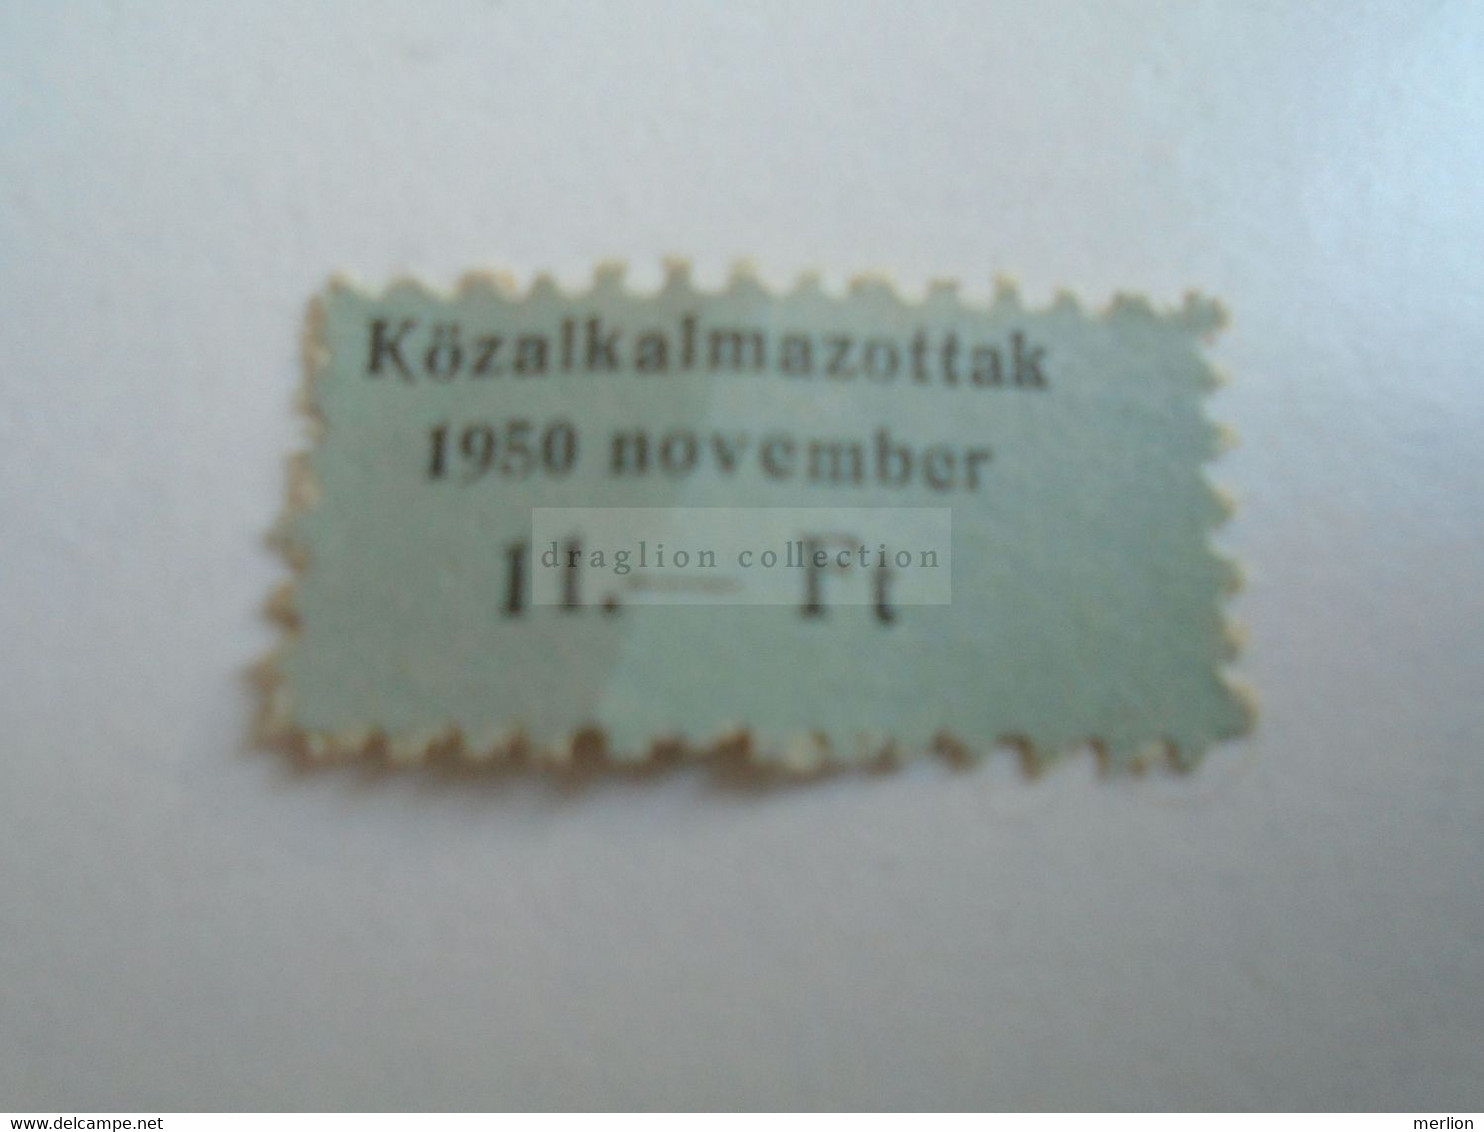 D188110  Hungary Membership Tax Stamp - Civil Servants   Közalkalmazottak    1950 - Steuermarken